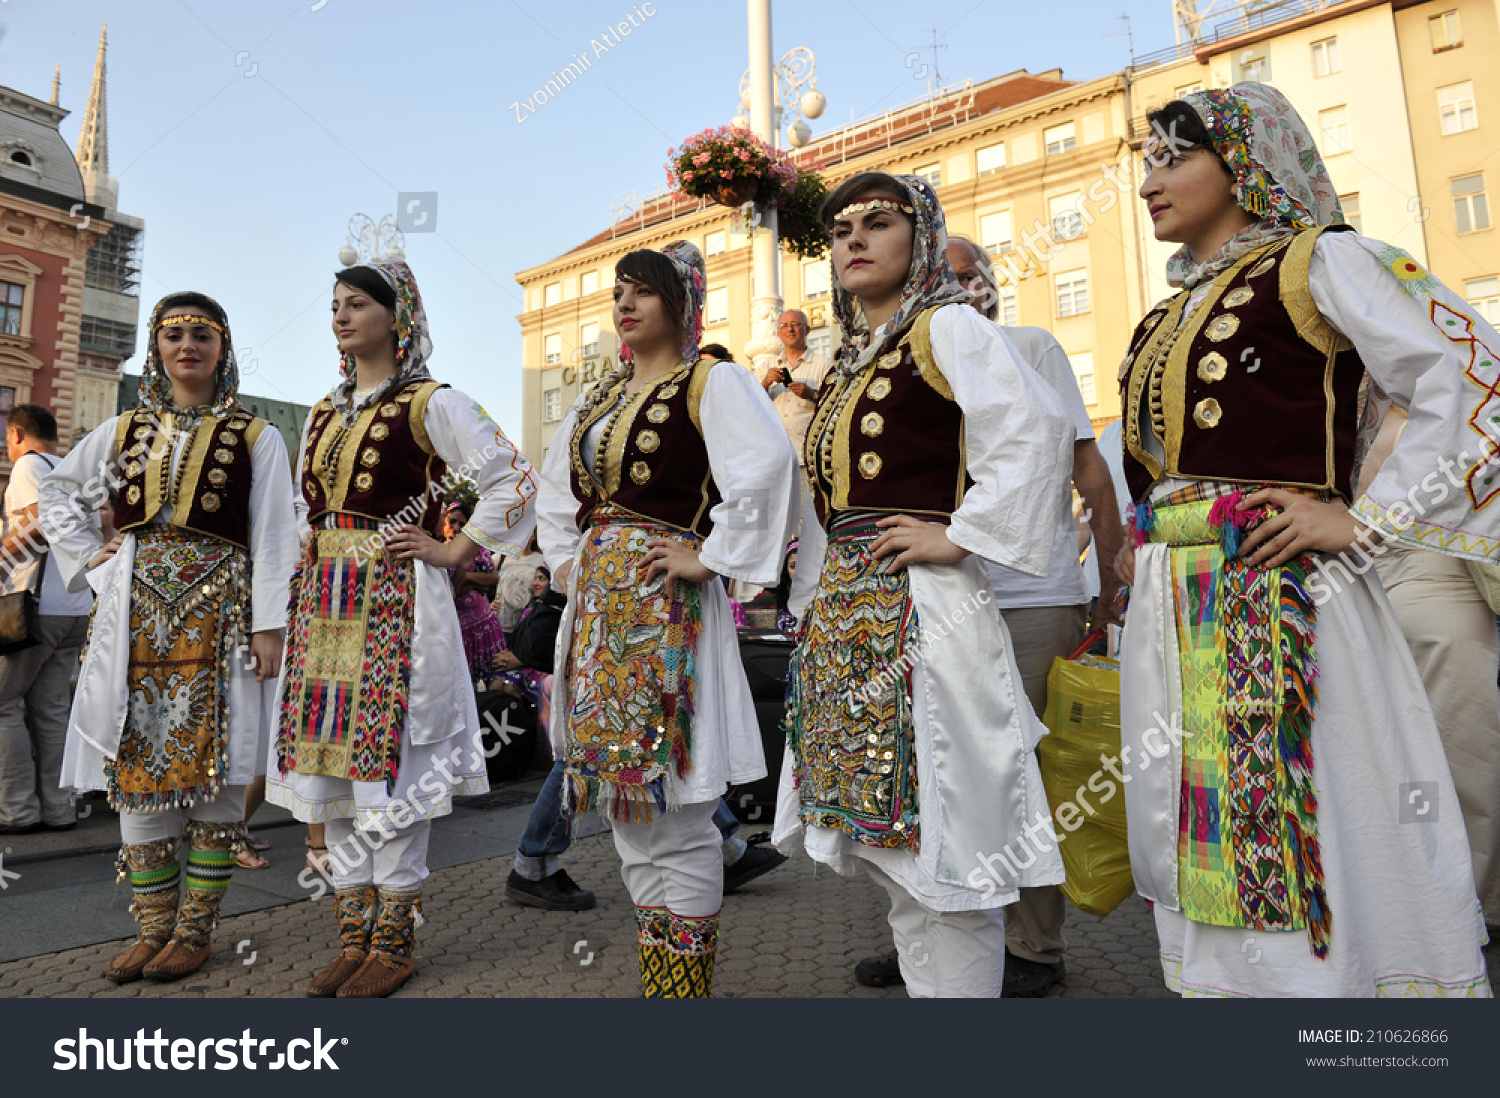 stock-photo-zagreb-croatia-july-members-of-folk-group-albanian-culture-society-jahi-hasani-from-cegrane-210626866.jpg